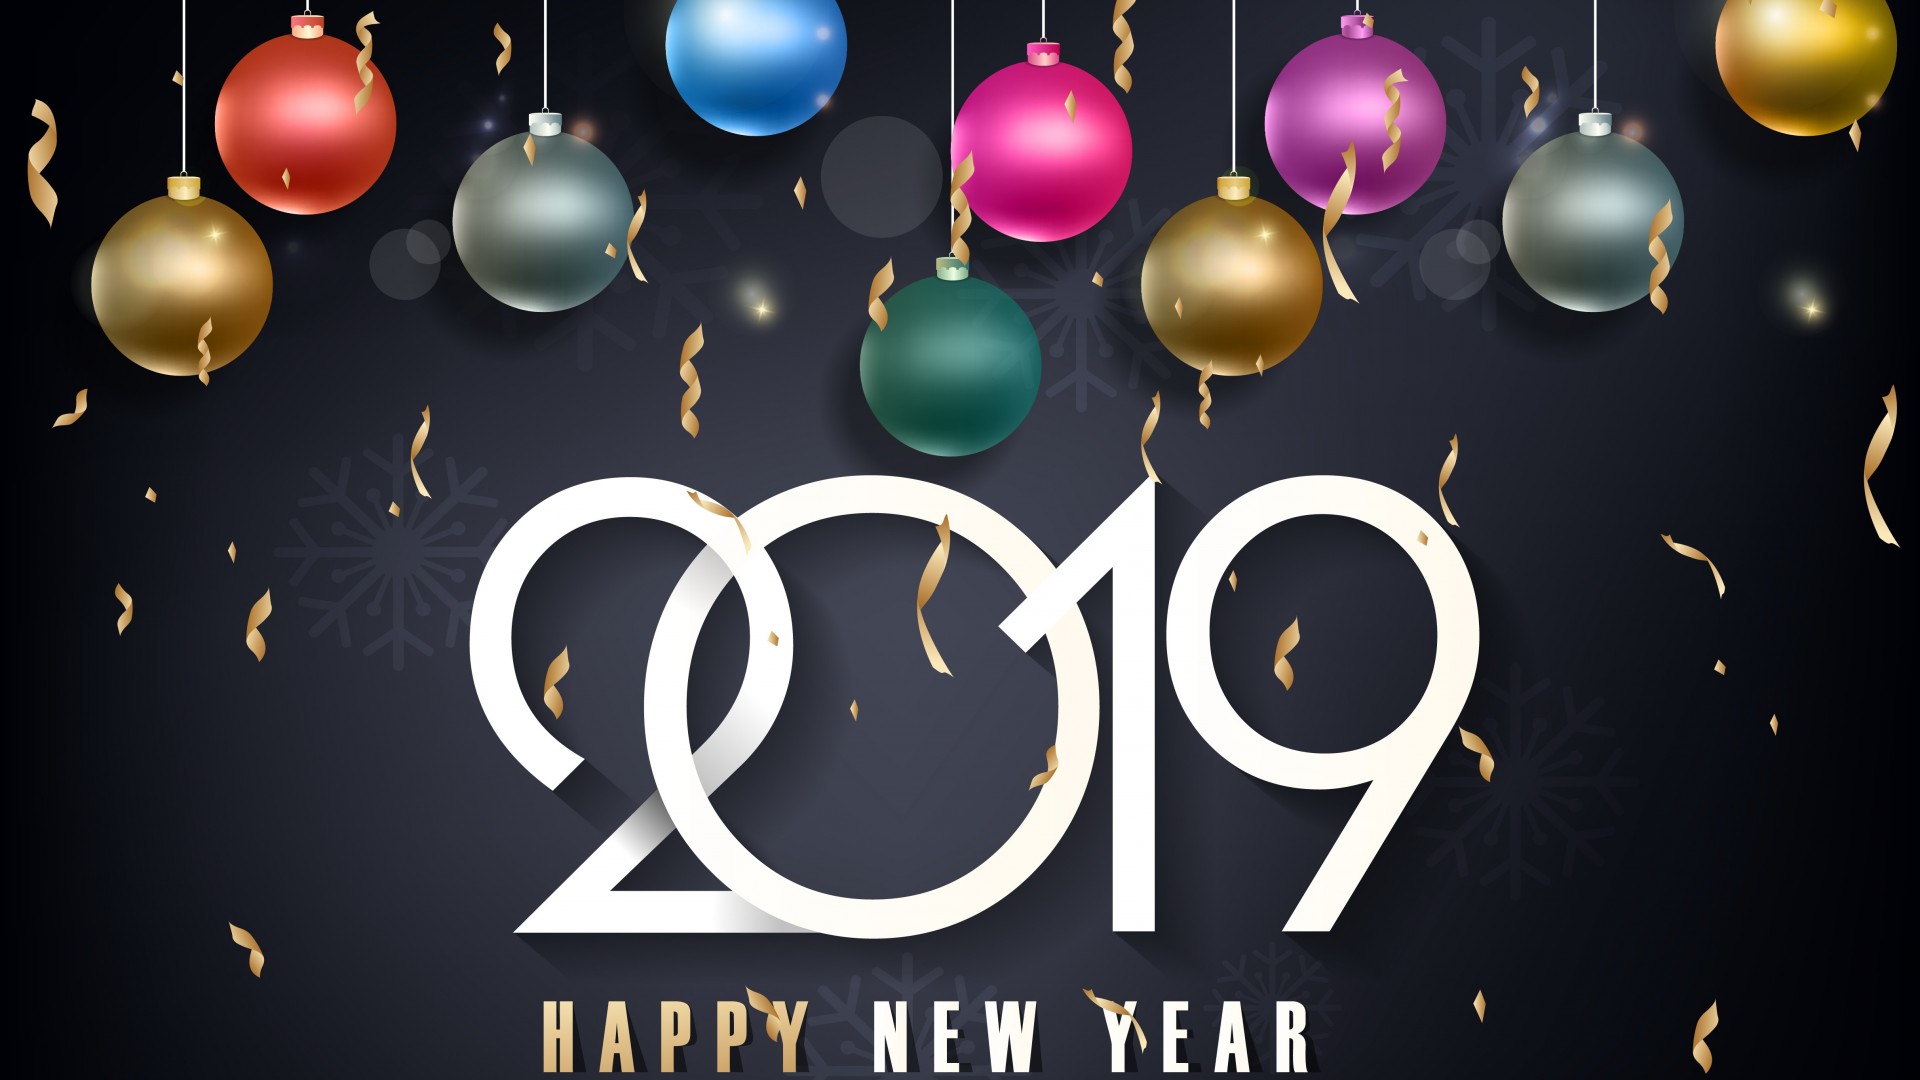 2019 1920x1080 Happy New Year Balloons